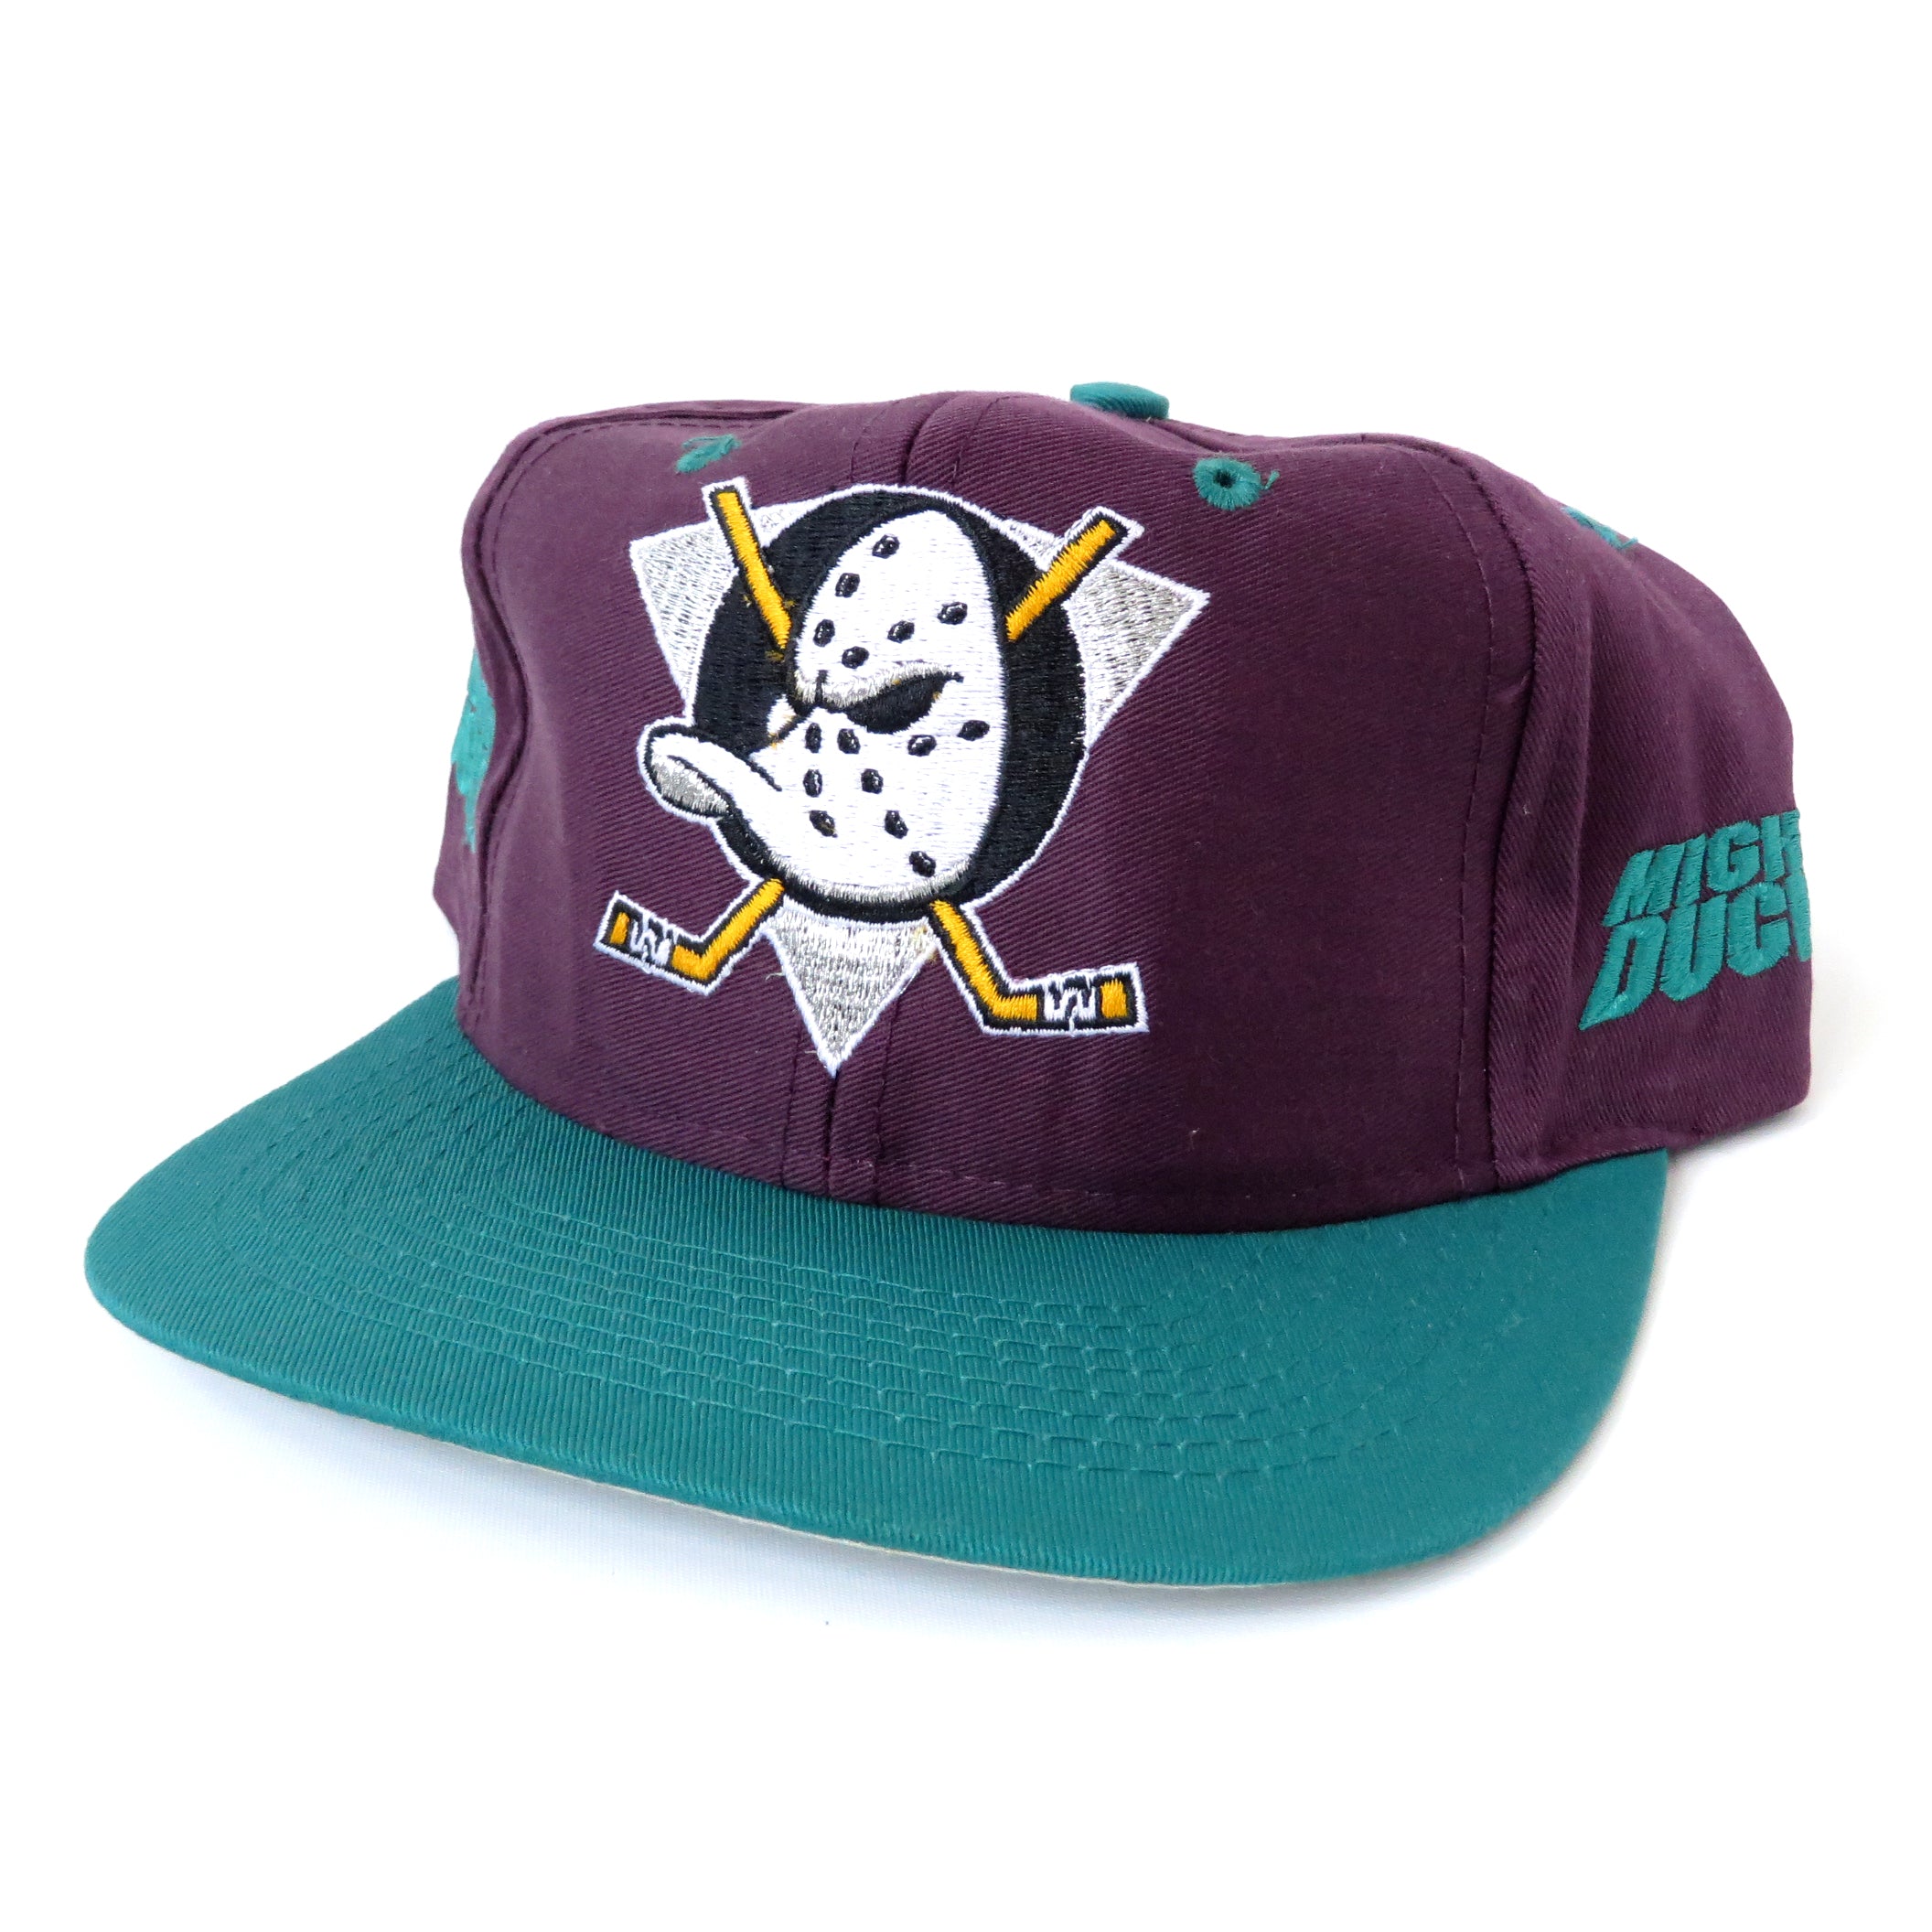 Vintage Anaheim Mighty Ducks Snapback Hat